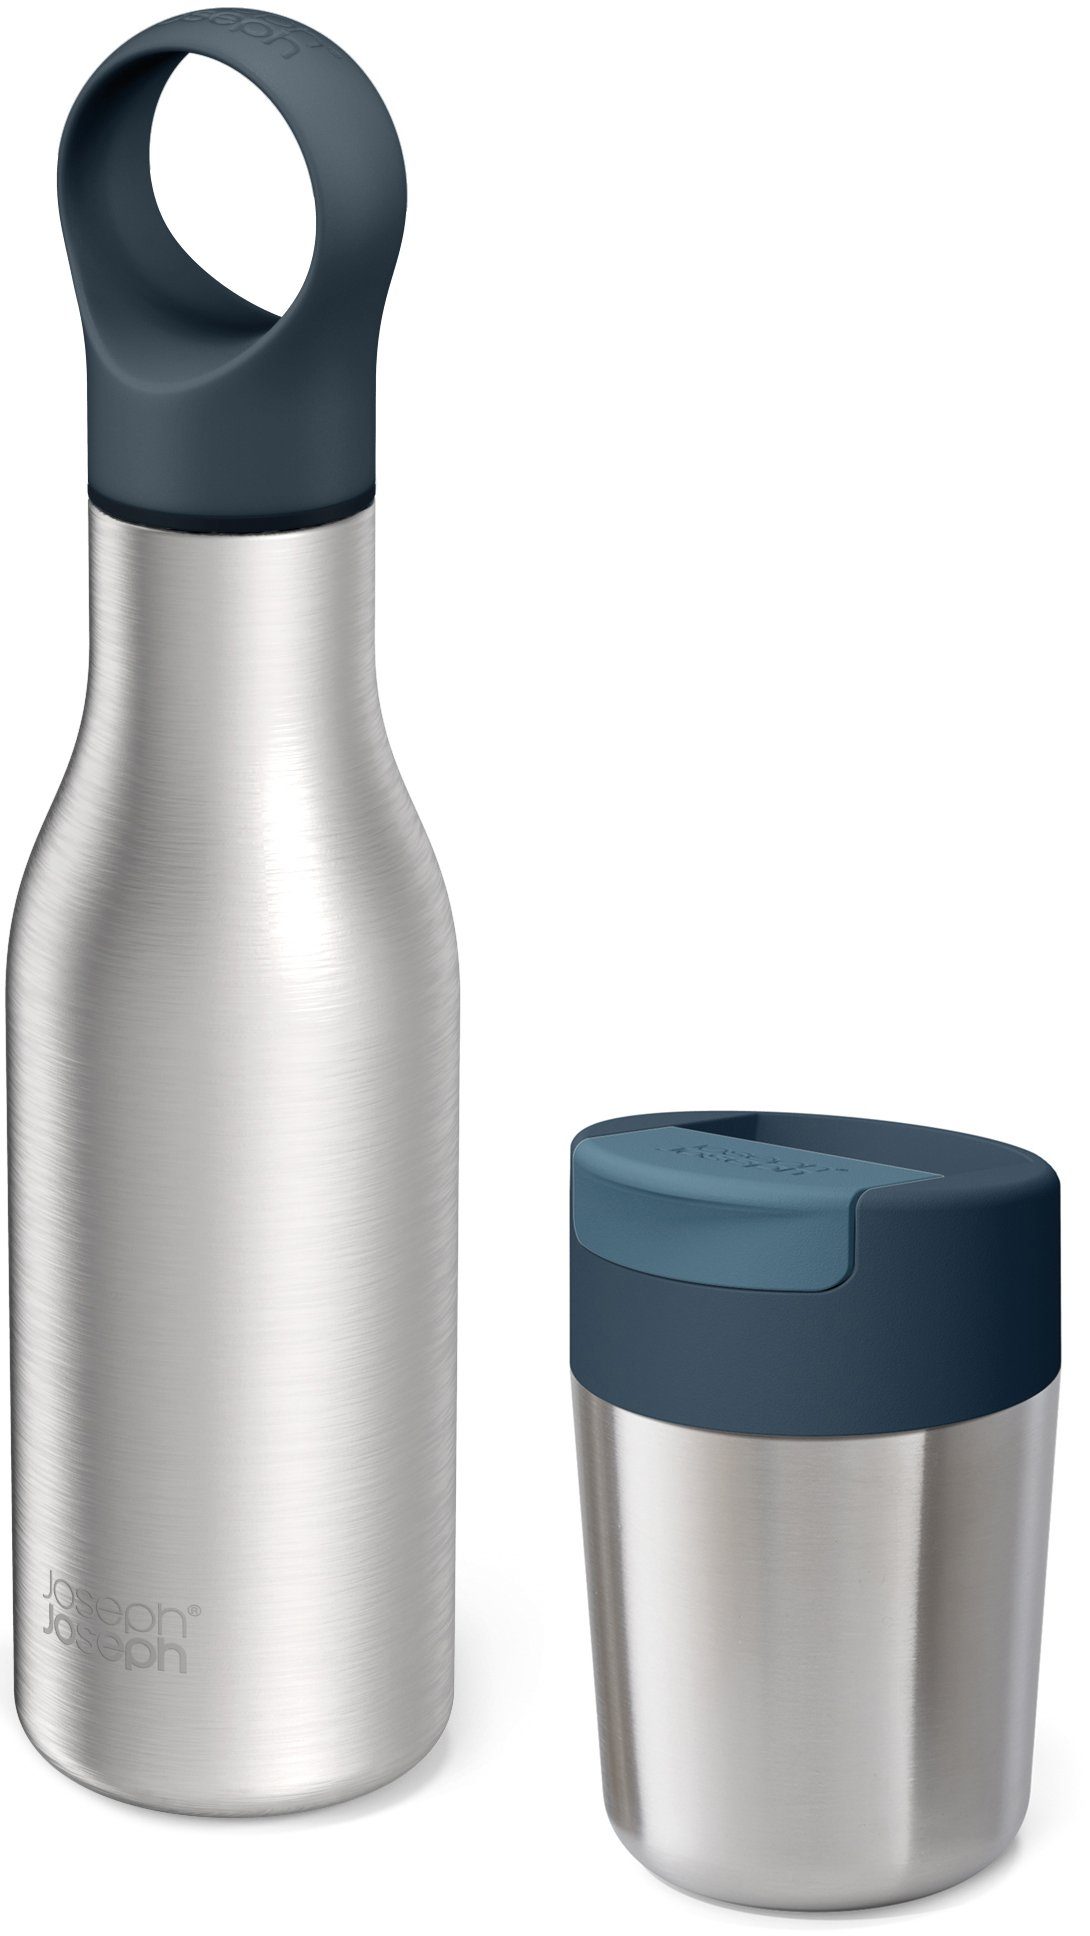 Vakuumisolierung Isolierflasche 340 Joseph Refill und 500 Reuse ml Joseph im Repeat, Becher ml Set), (Flaschen